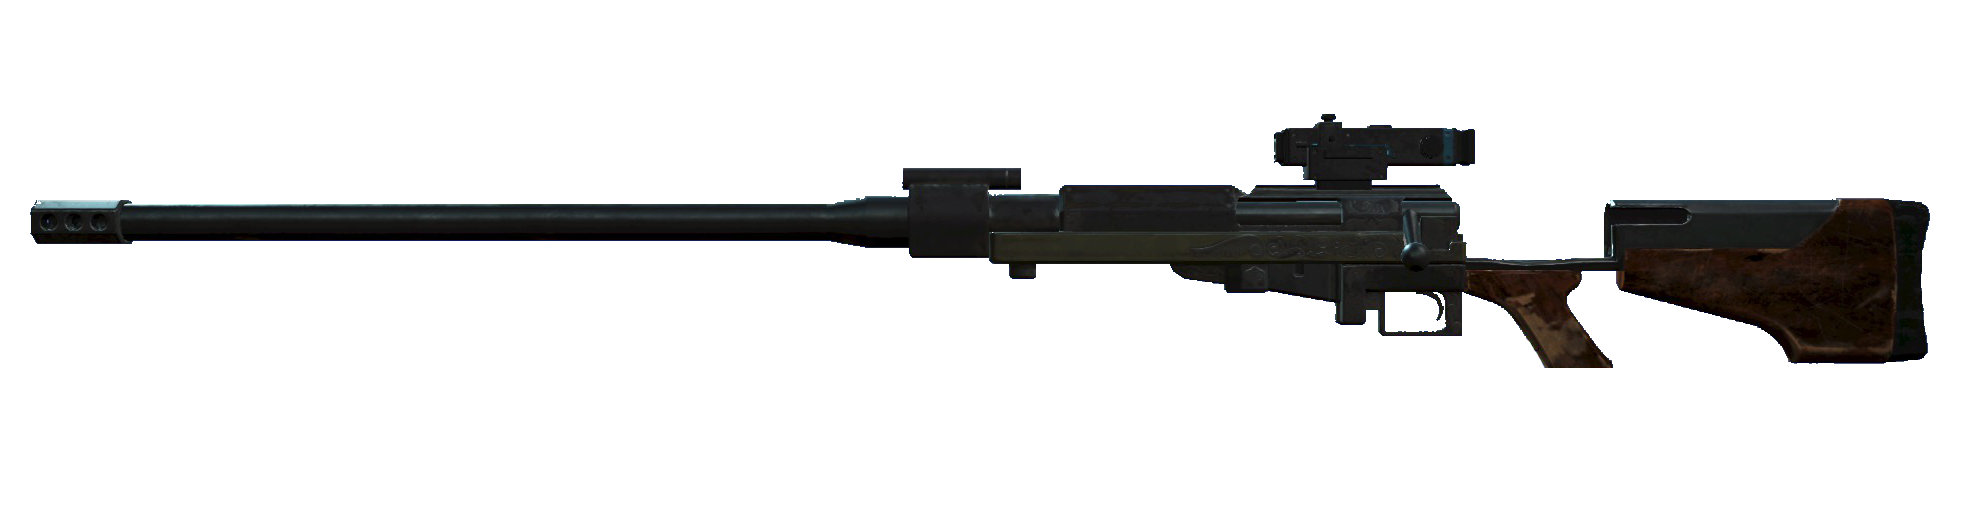 new vegas anti material rifle